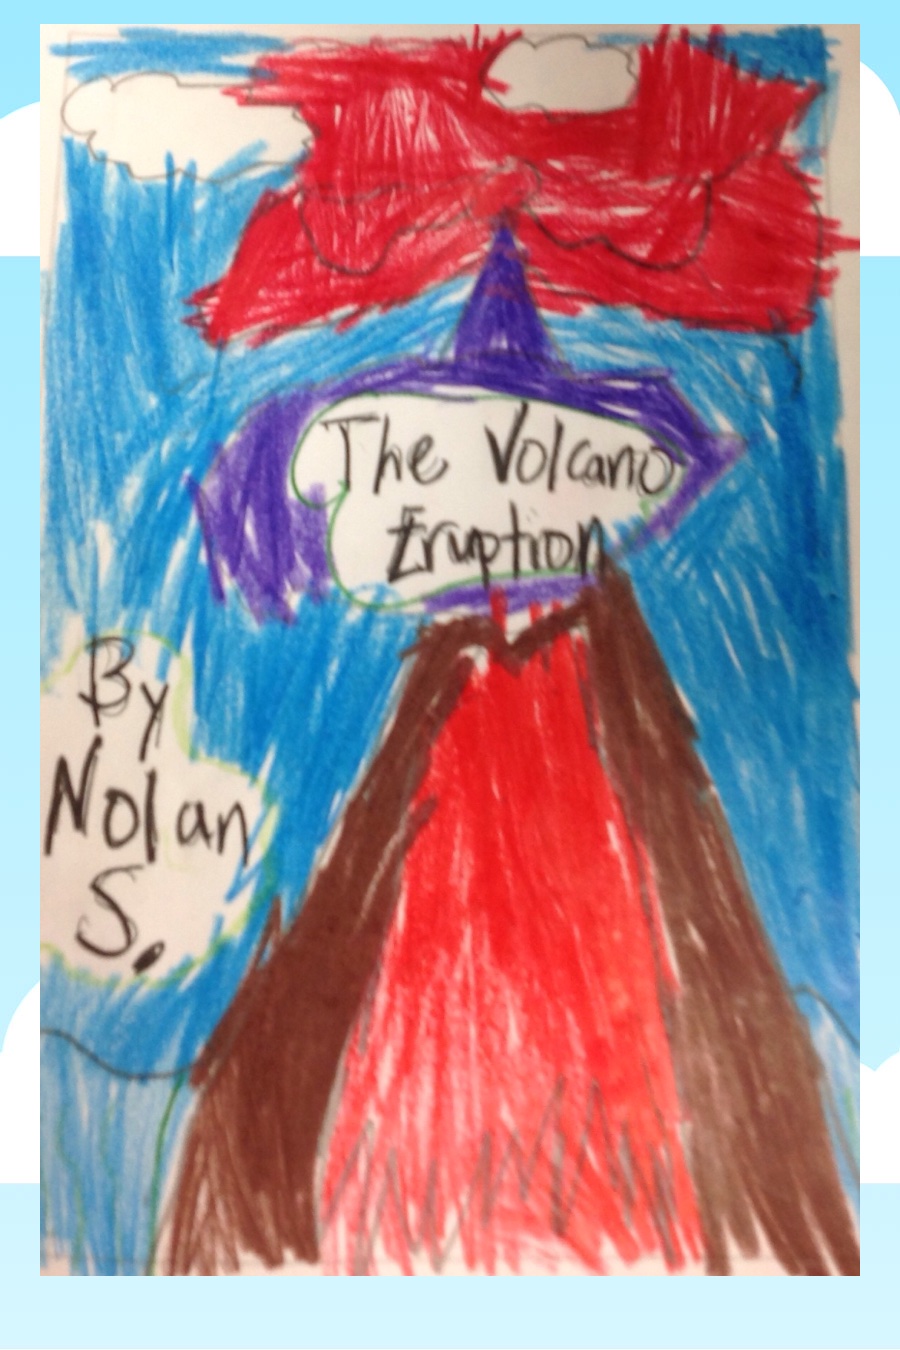 The Volcano Eruption by Nolan S